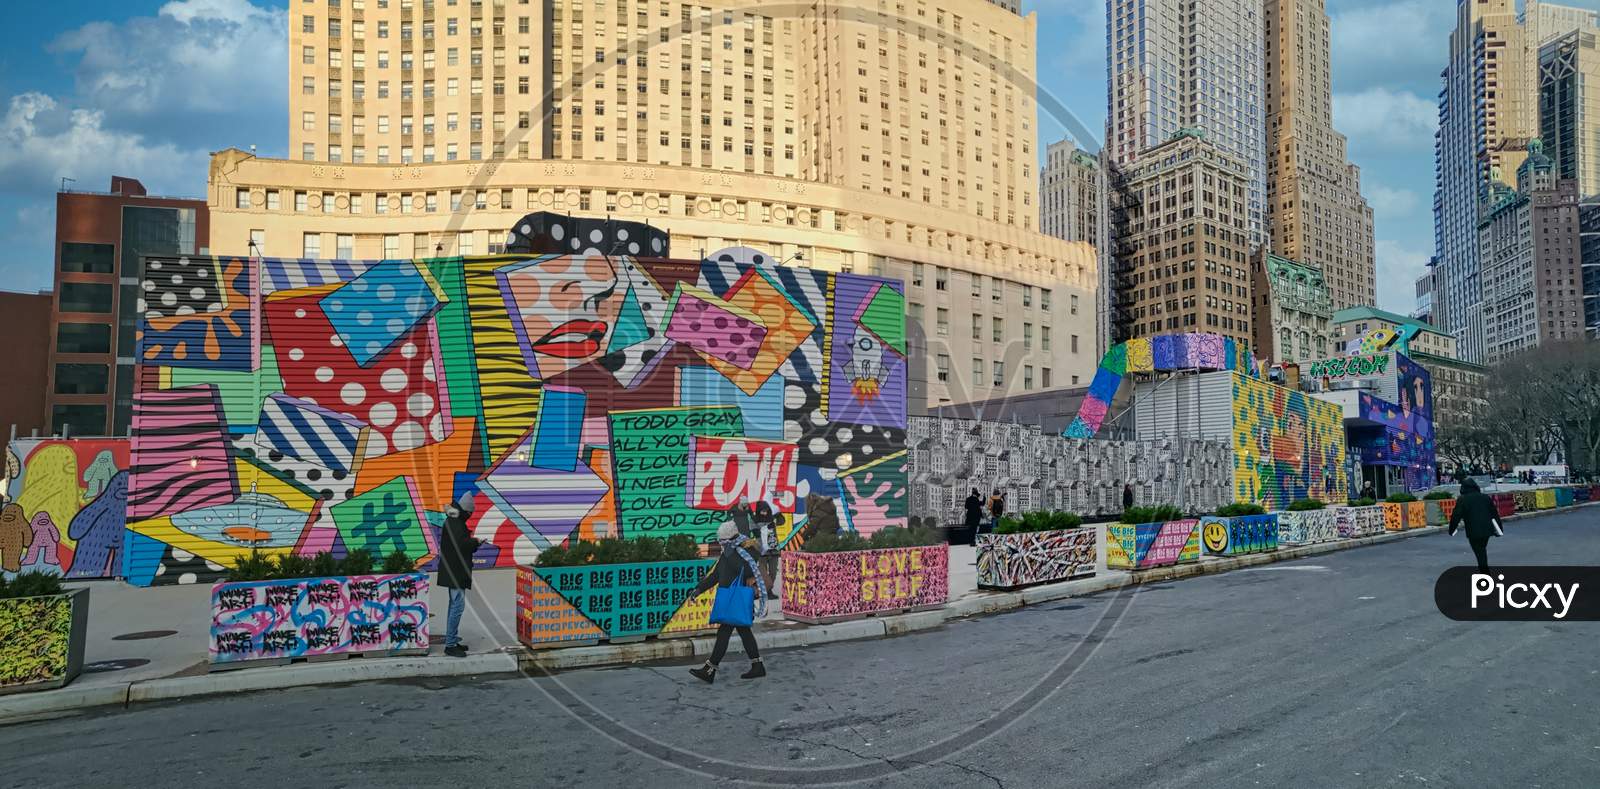 Mural art (Graffiti) at the world Trade plaza in Lower Manhattan New York